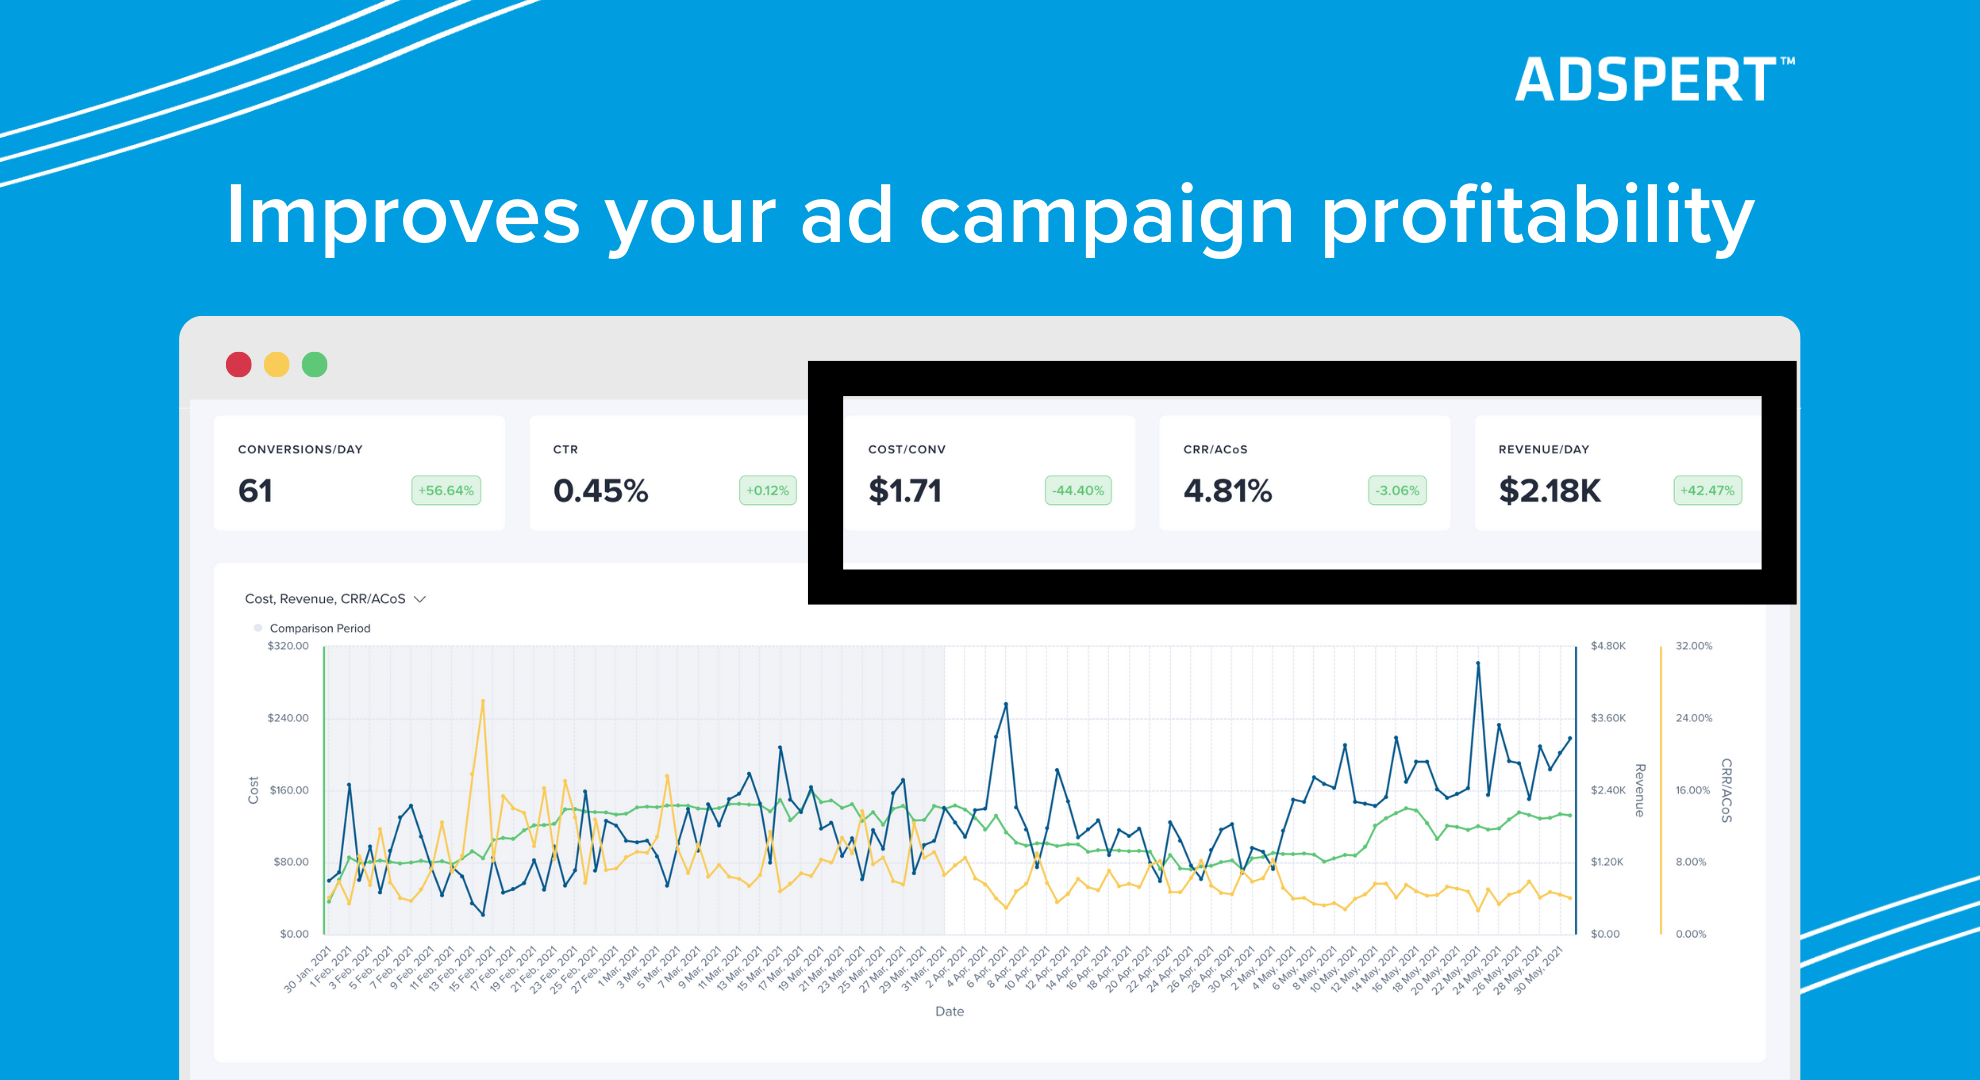 Adspert.net Improves your ad campaign profitability